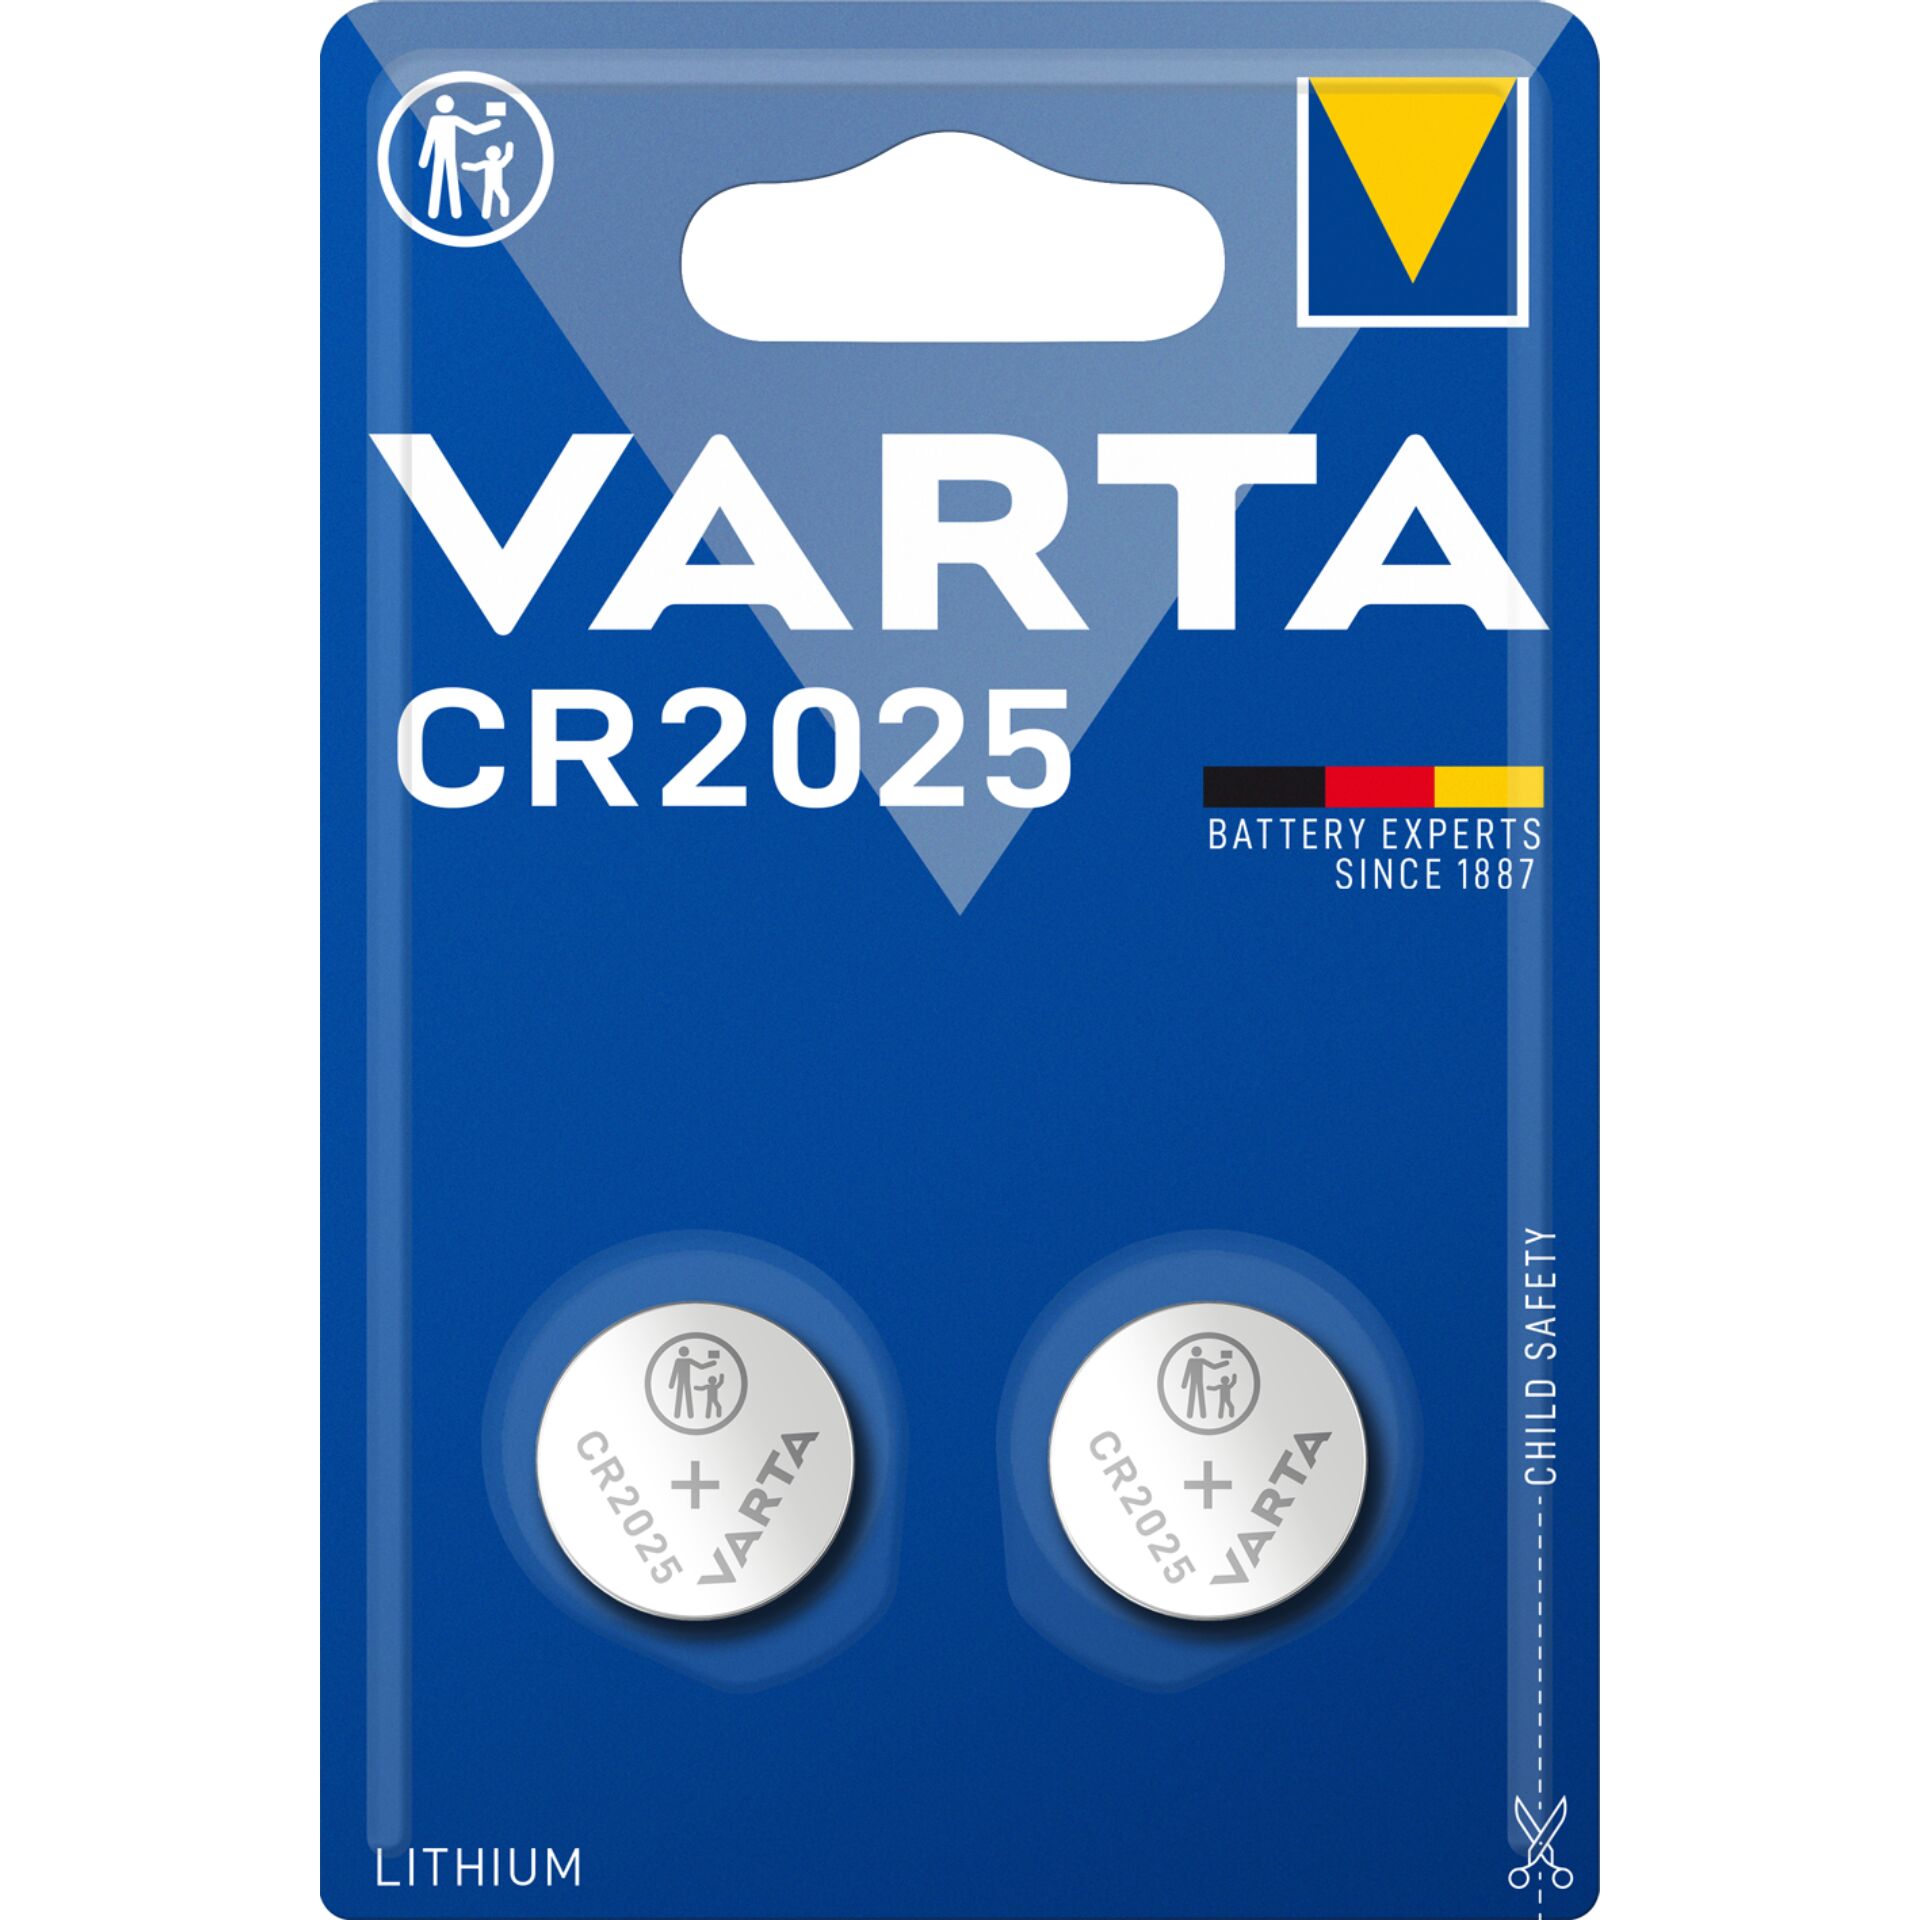 Varta CR2025, Knopfzelle 1x2, Lithium, 3V 